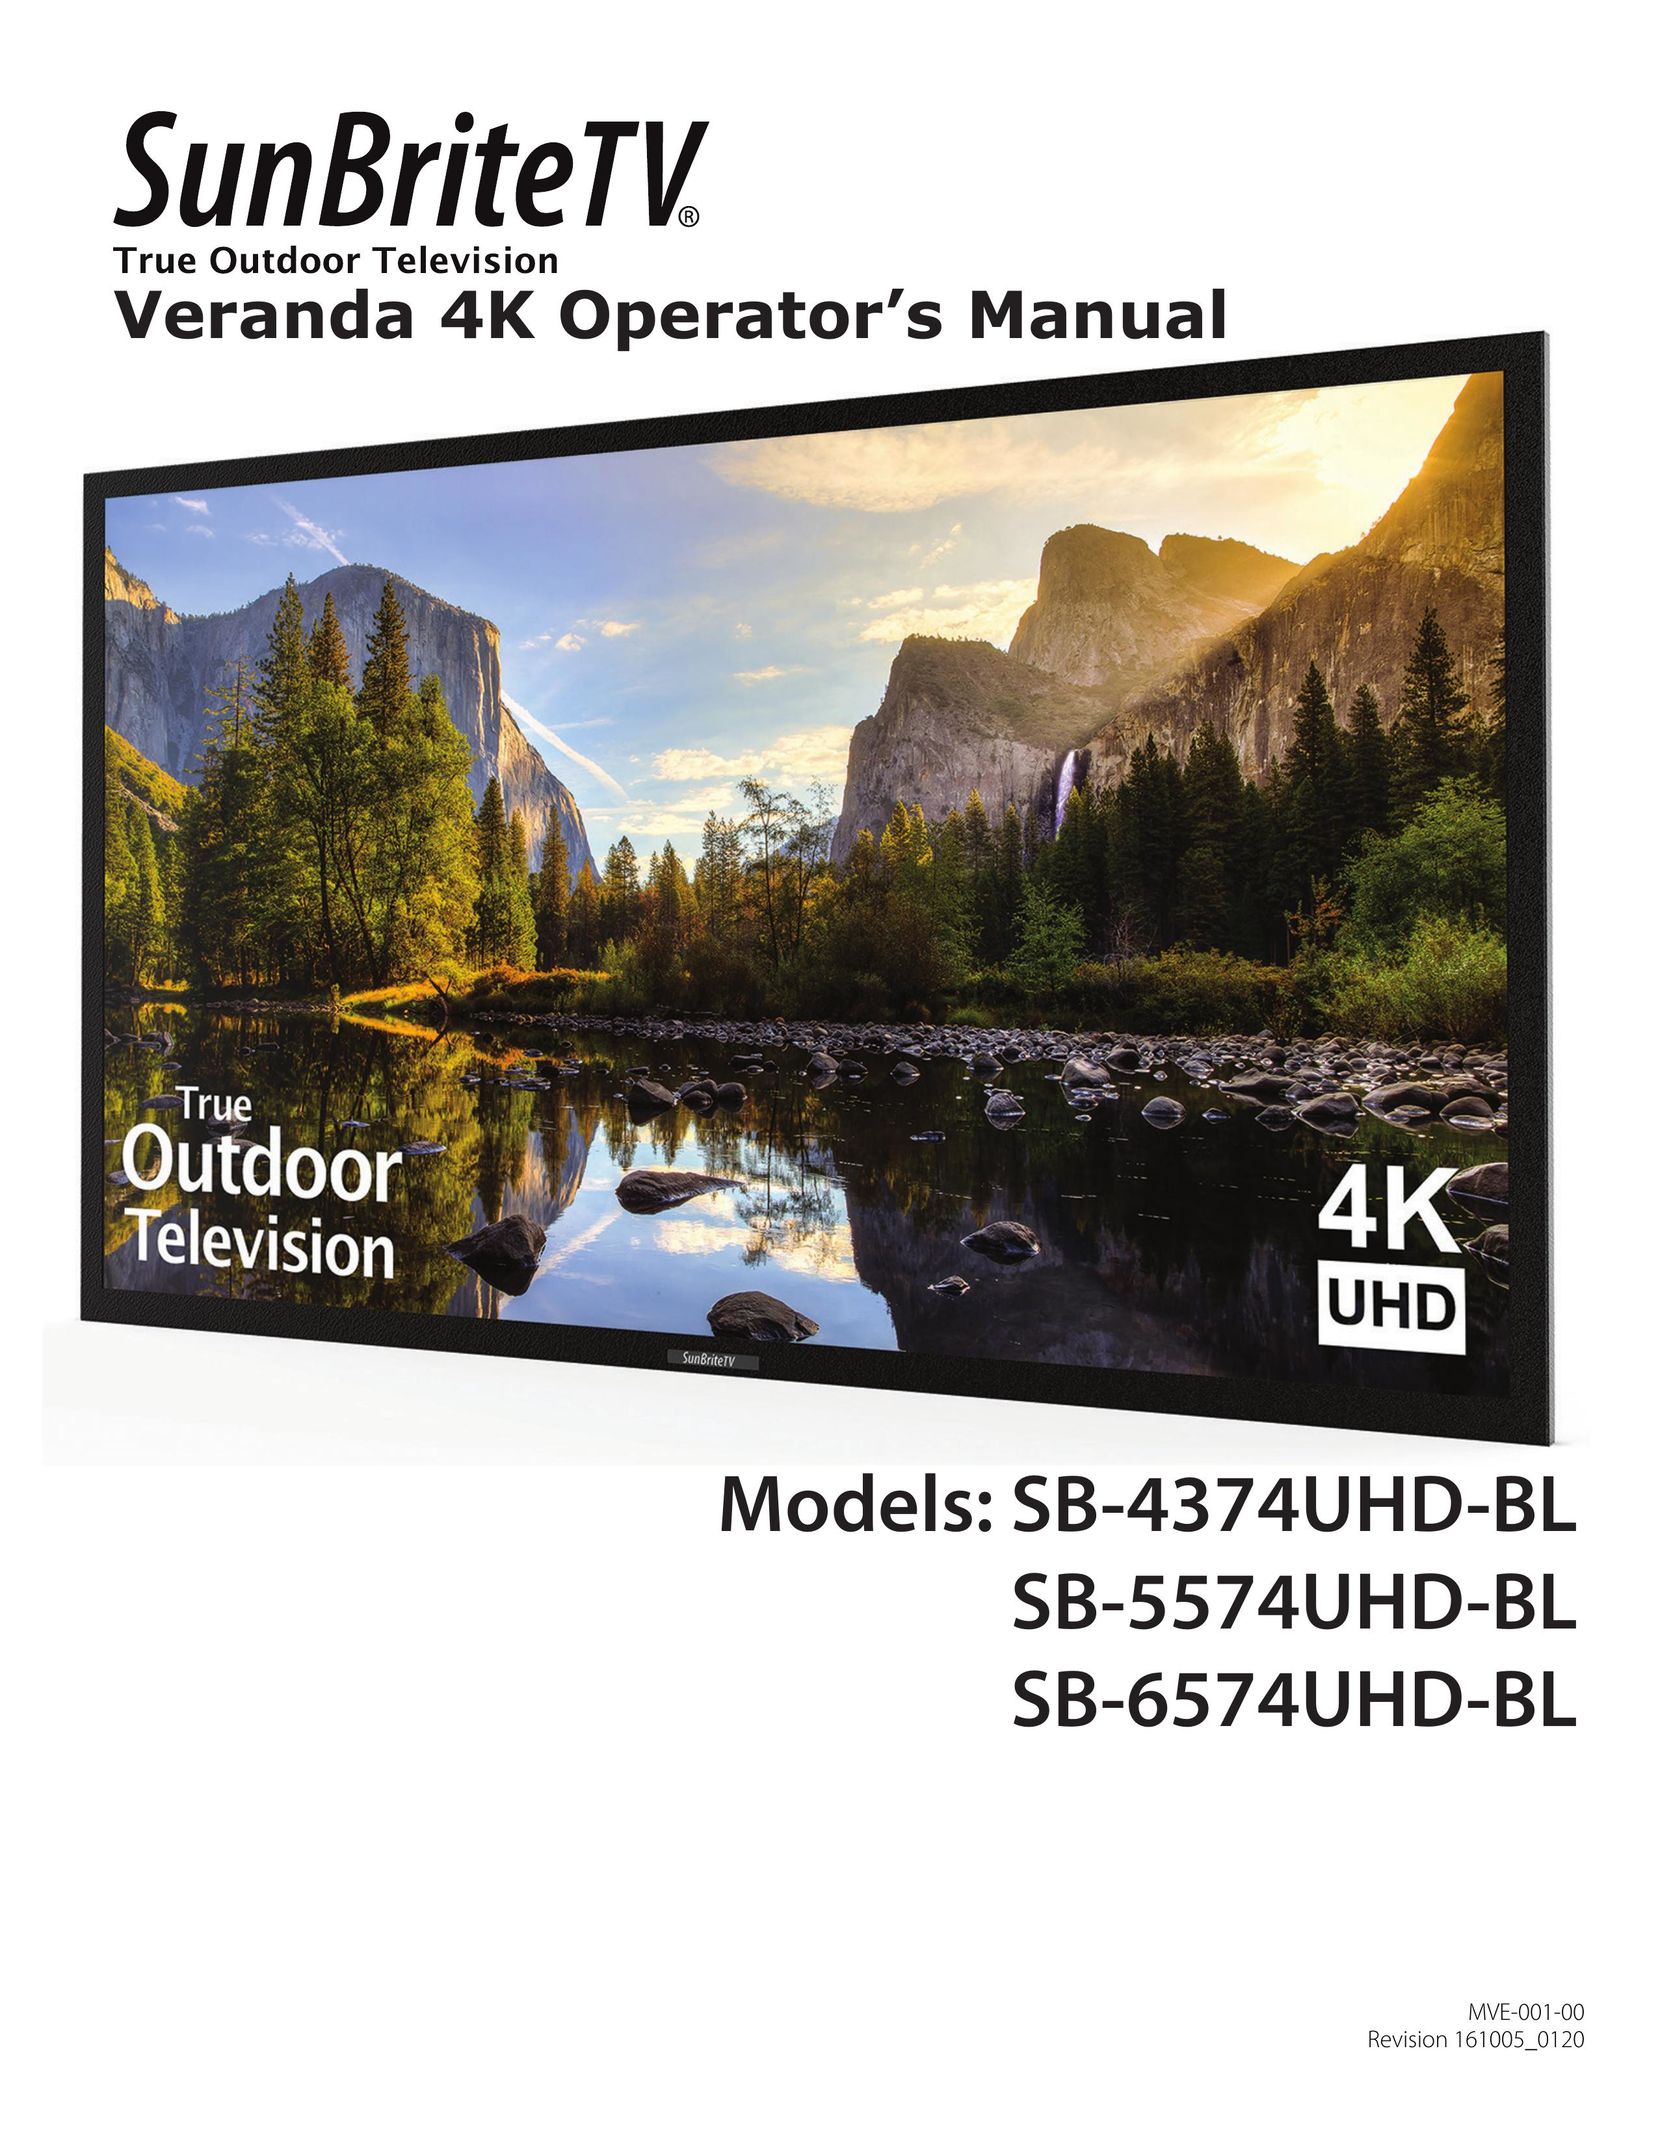 SunBriteTV SB-4374UHD-BL Flat Panel Television User Manual